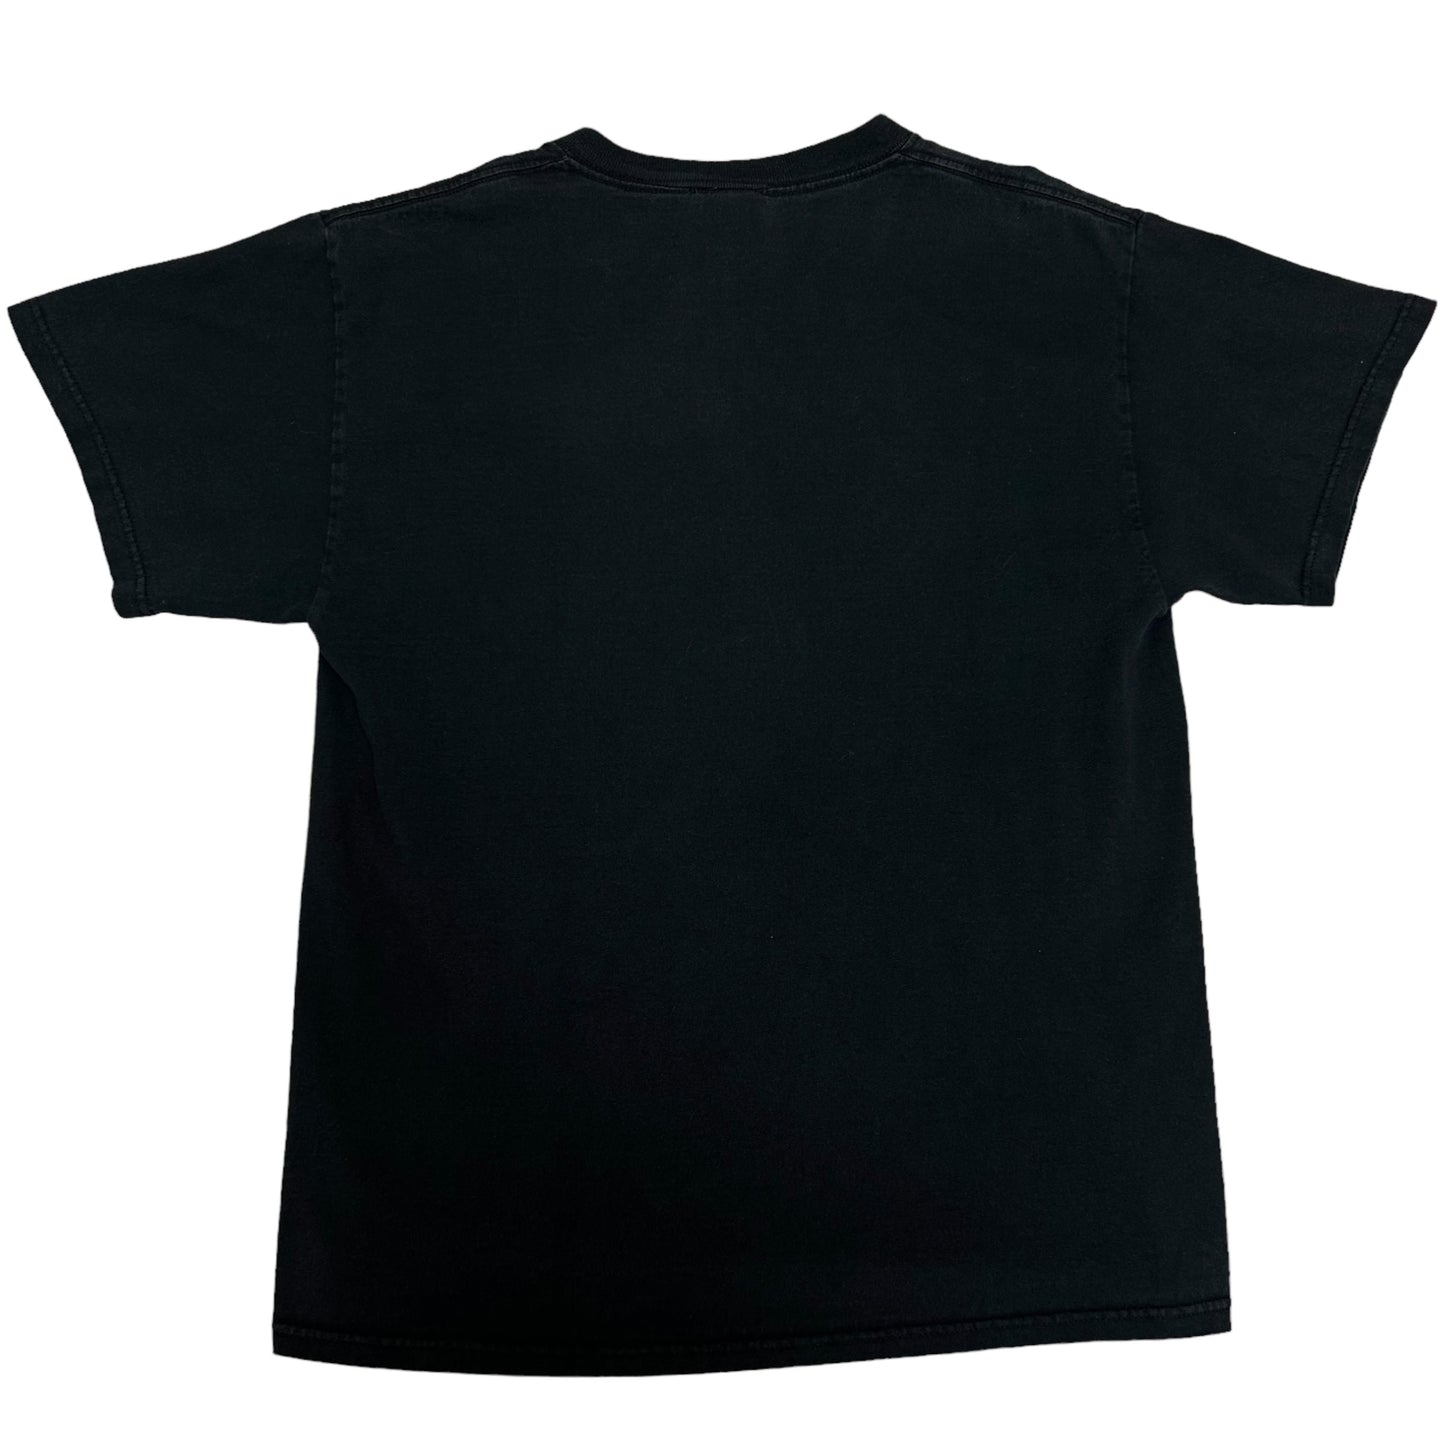 Early 2000s Lee Sport Black Philadelphia Flyers Graphic T-Shirt - Size Medium